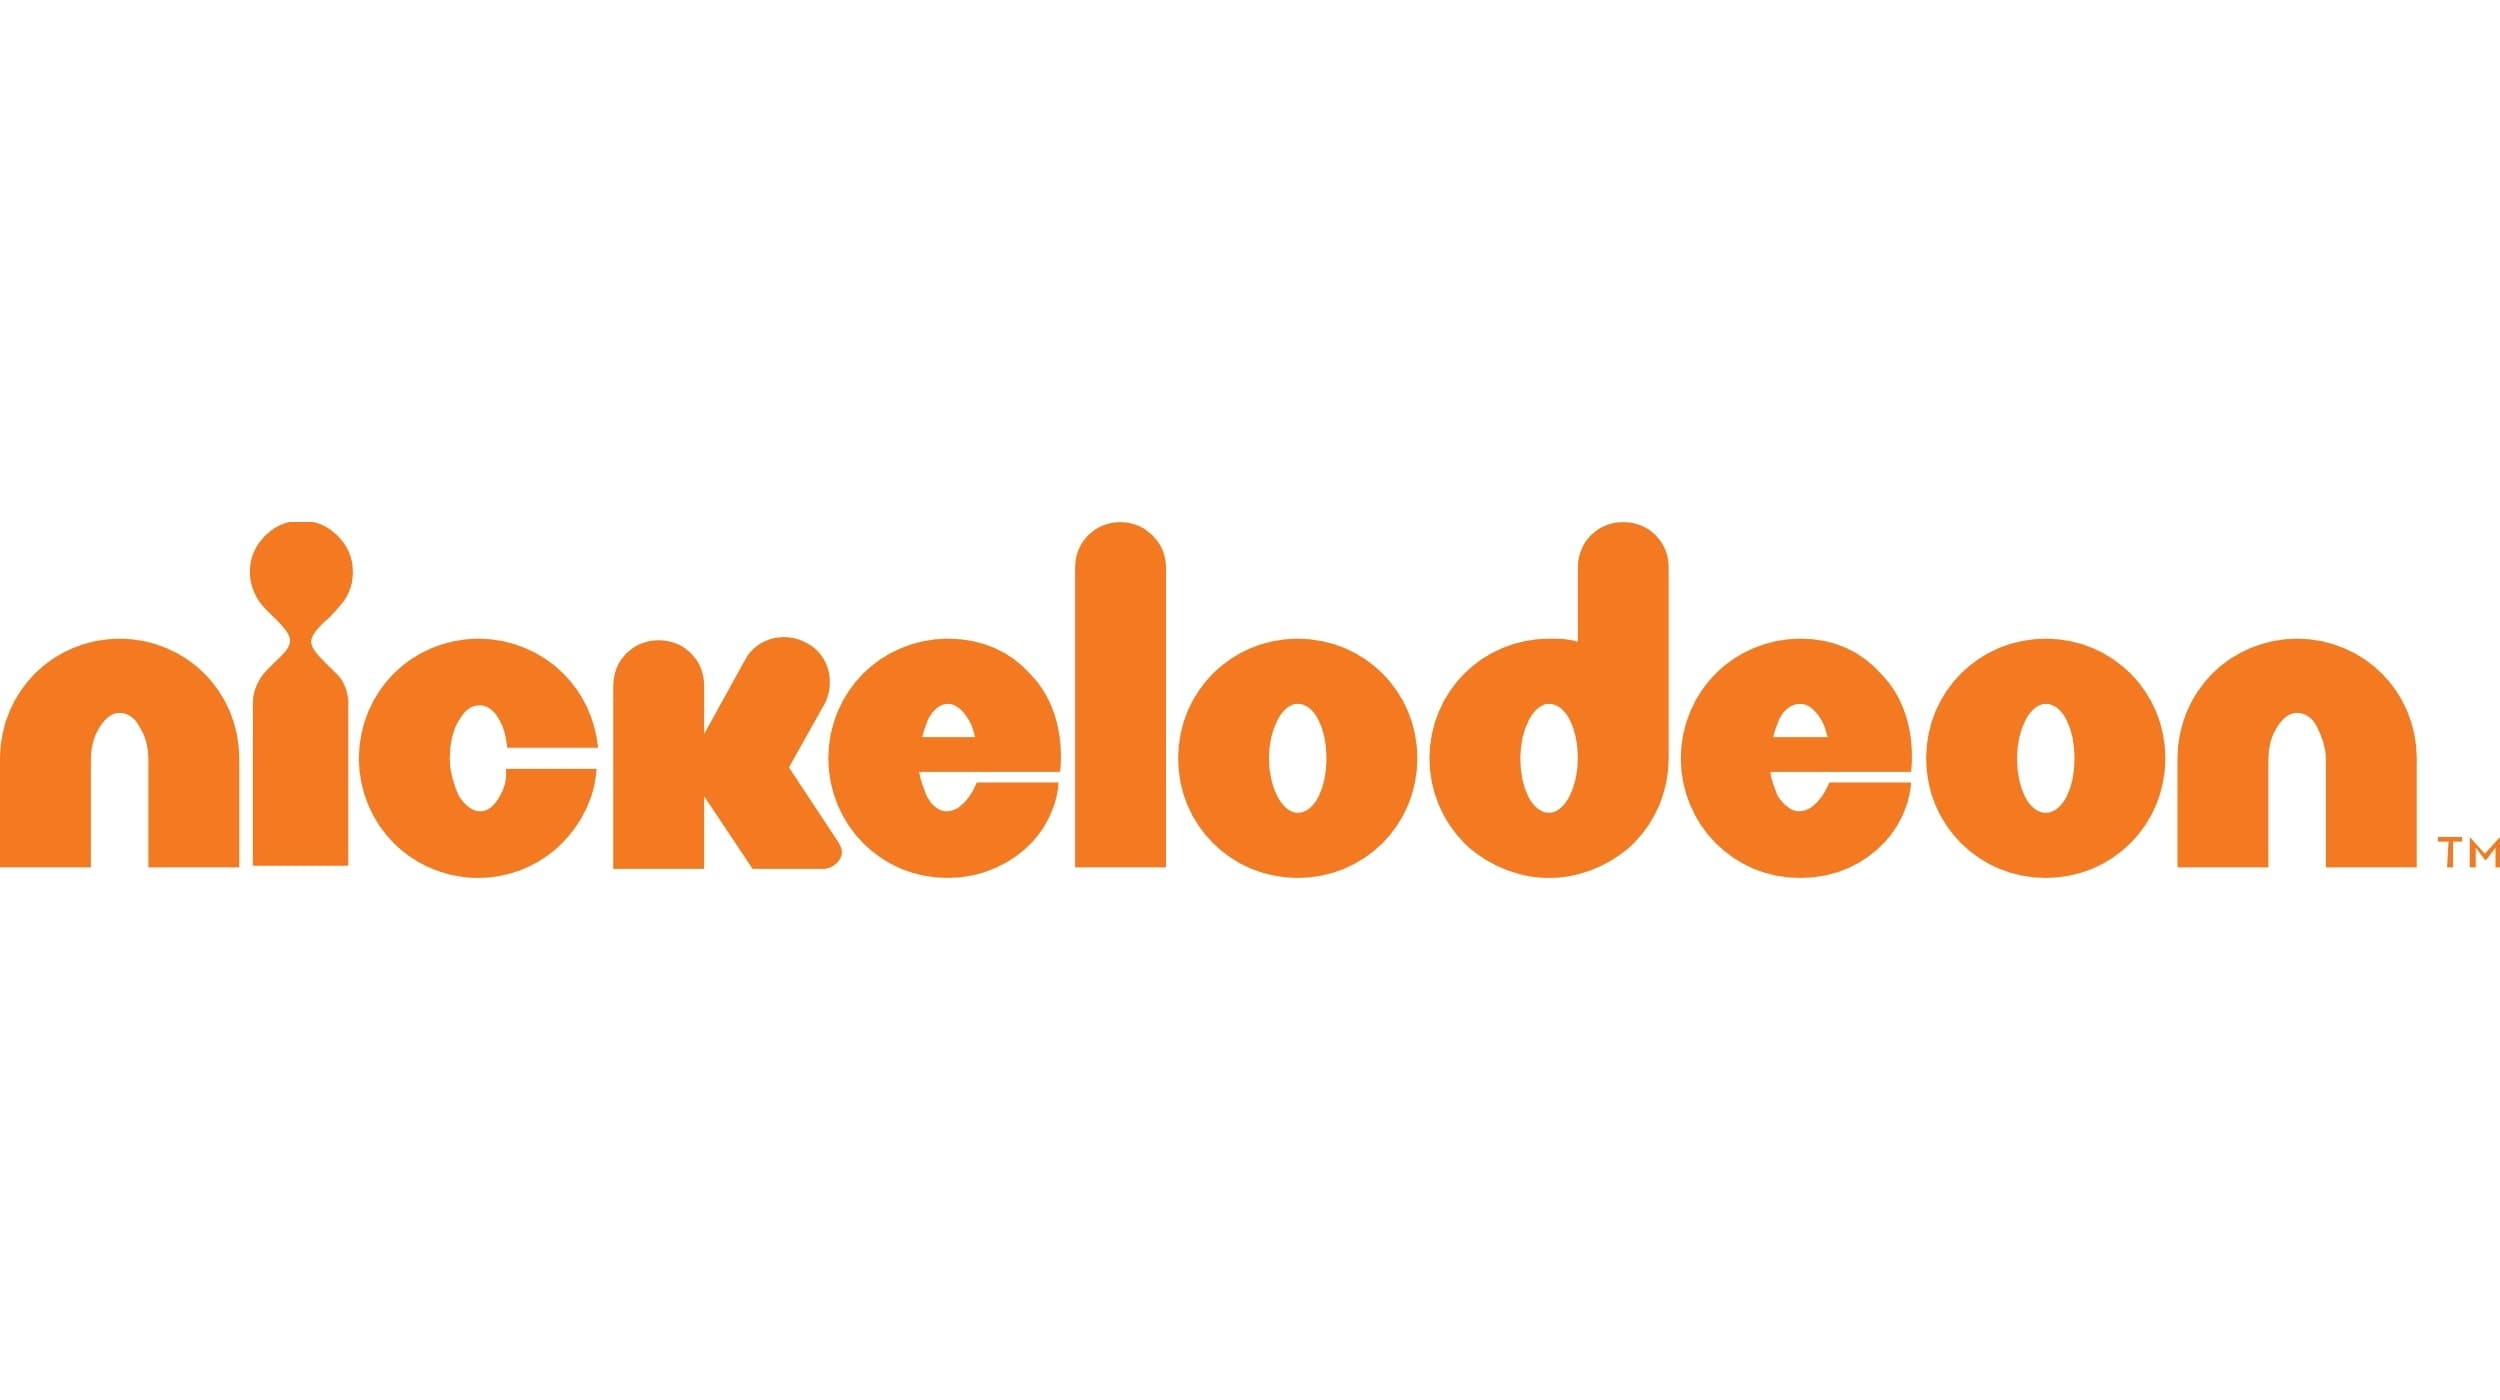 Nick channel. Лого канала Никелодеон. Телеканал Nick логотип. Nickelodeon Россия логотип. Nickelodeon логотип прозрачный.